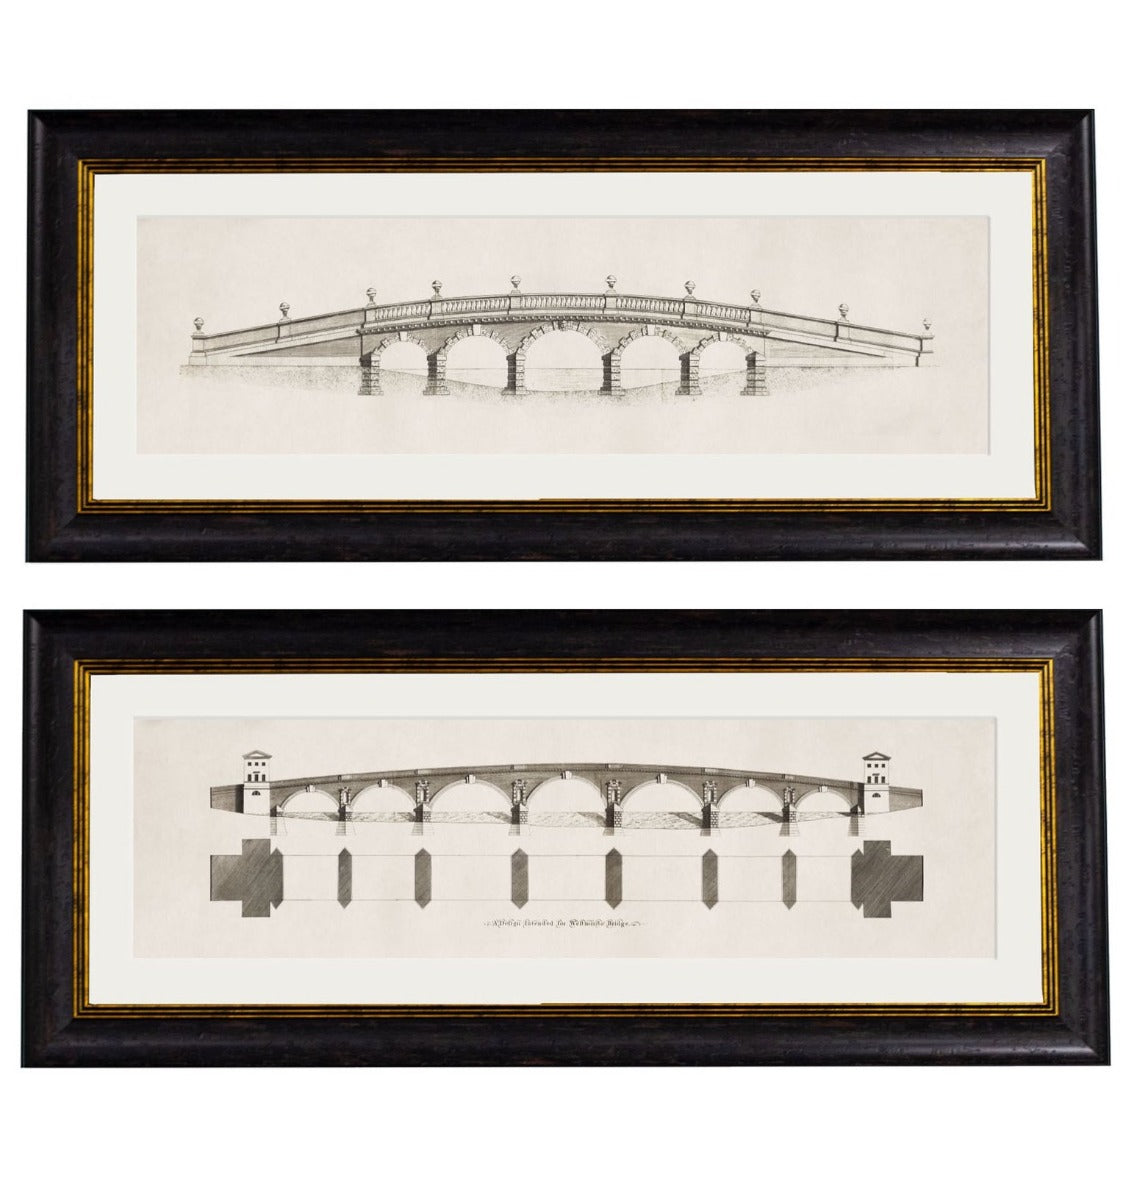 C.1756 Architectural Elevations of Bridges